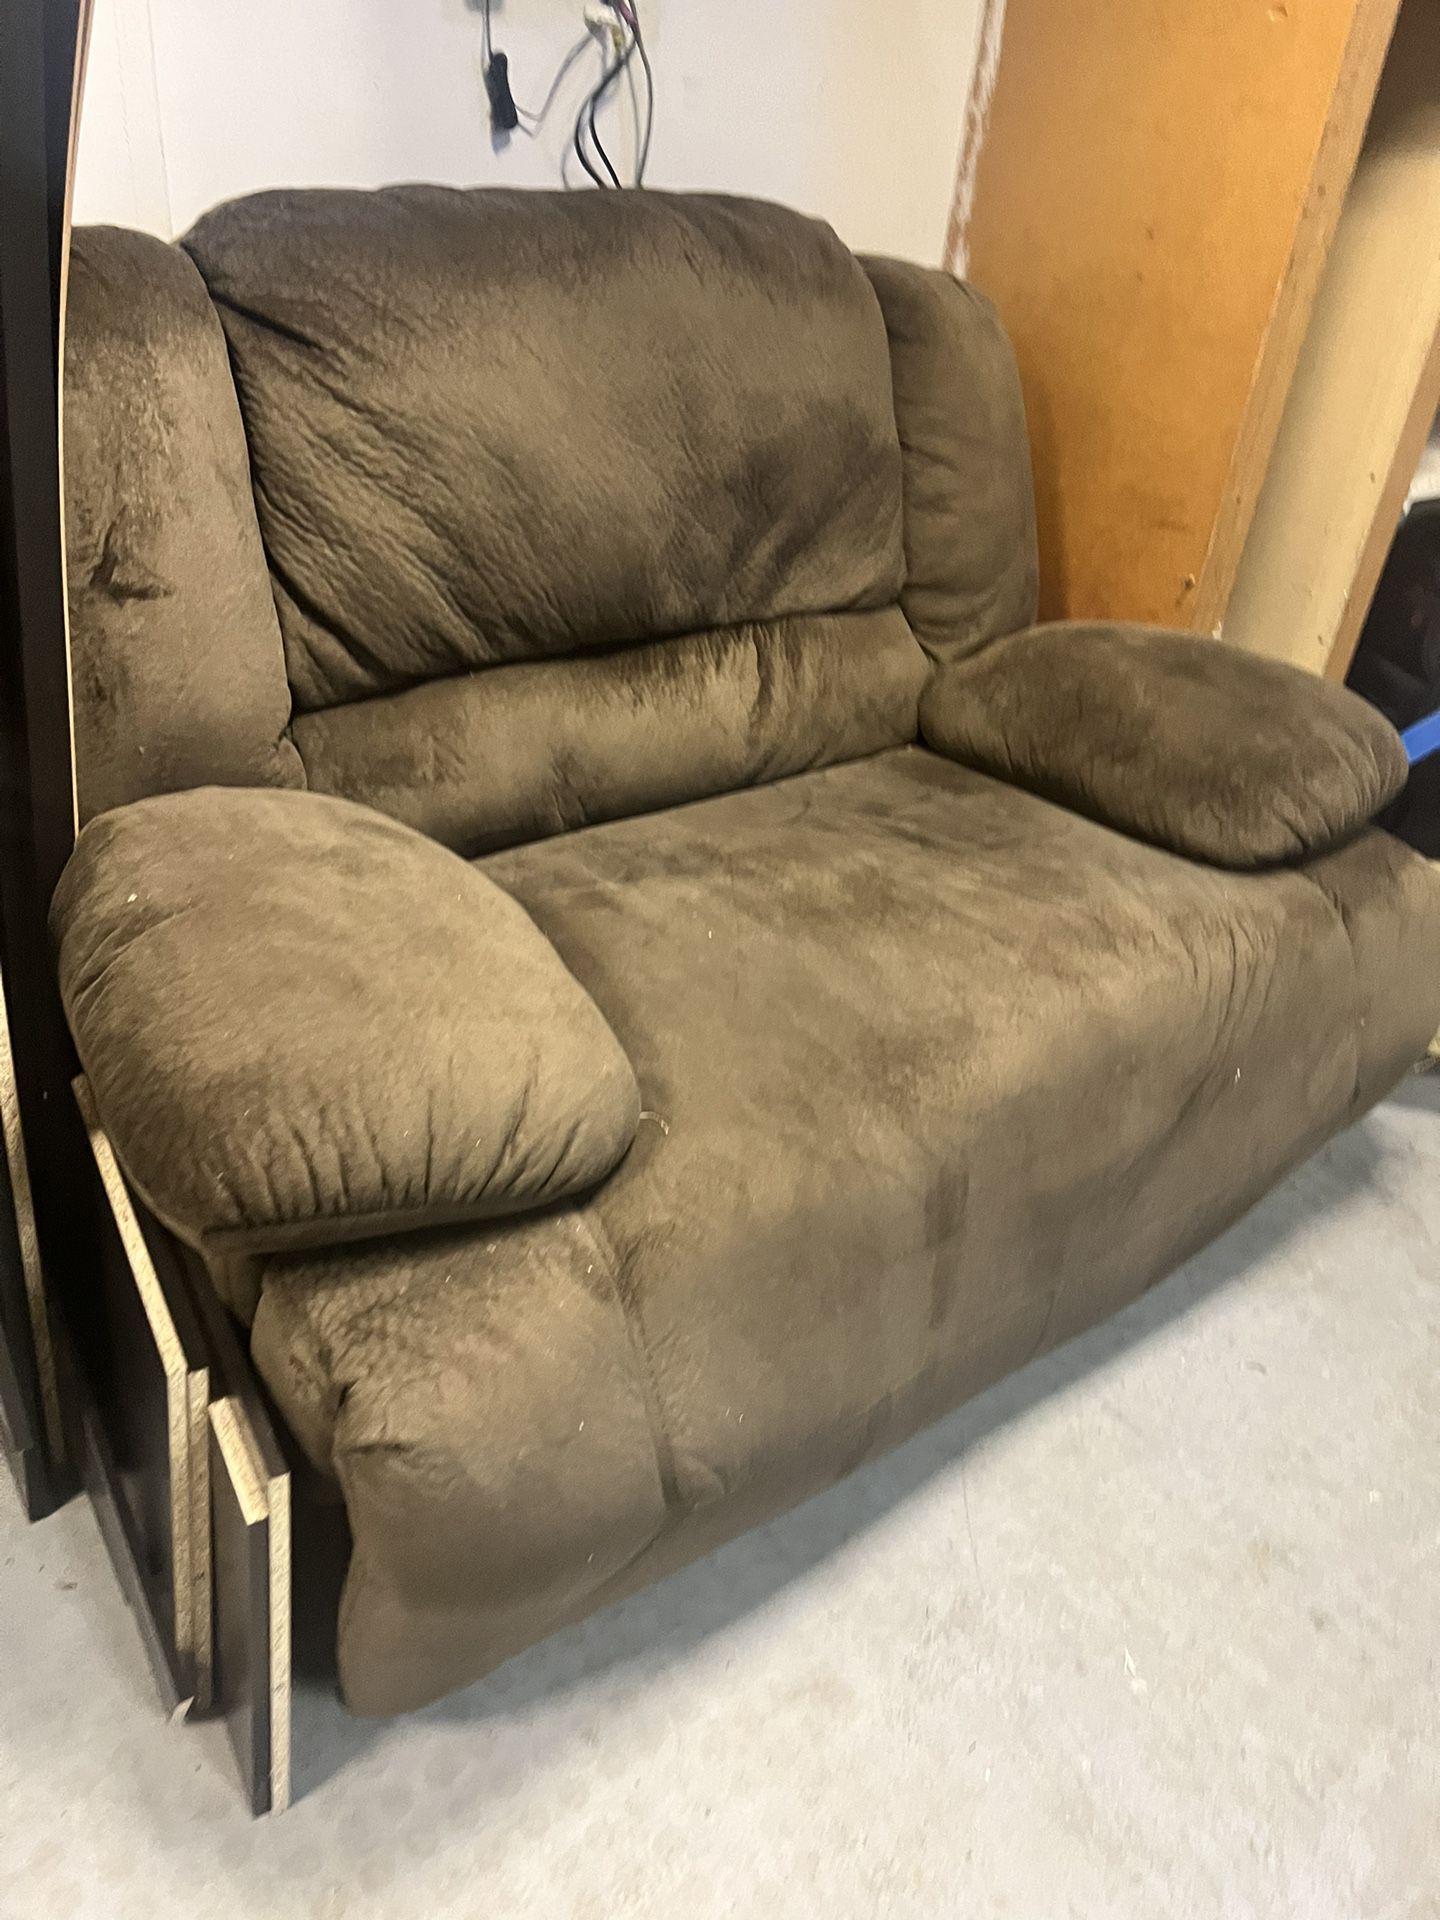 Free Large Chair/Loveseat